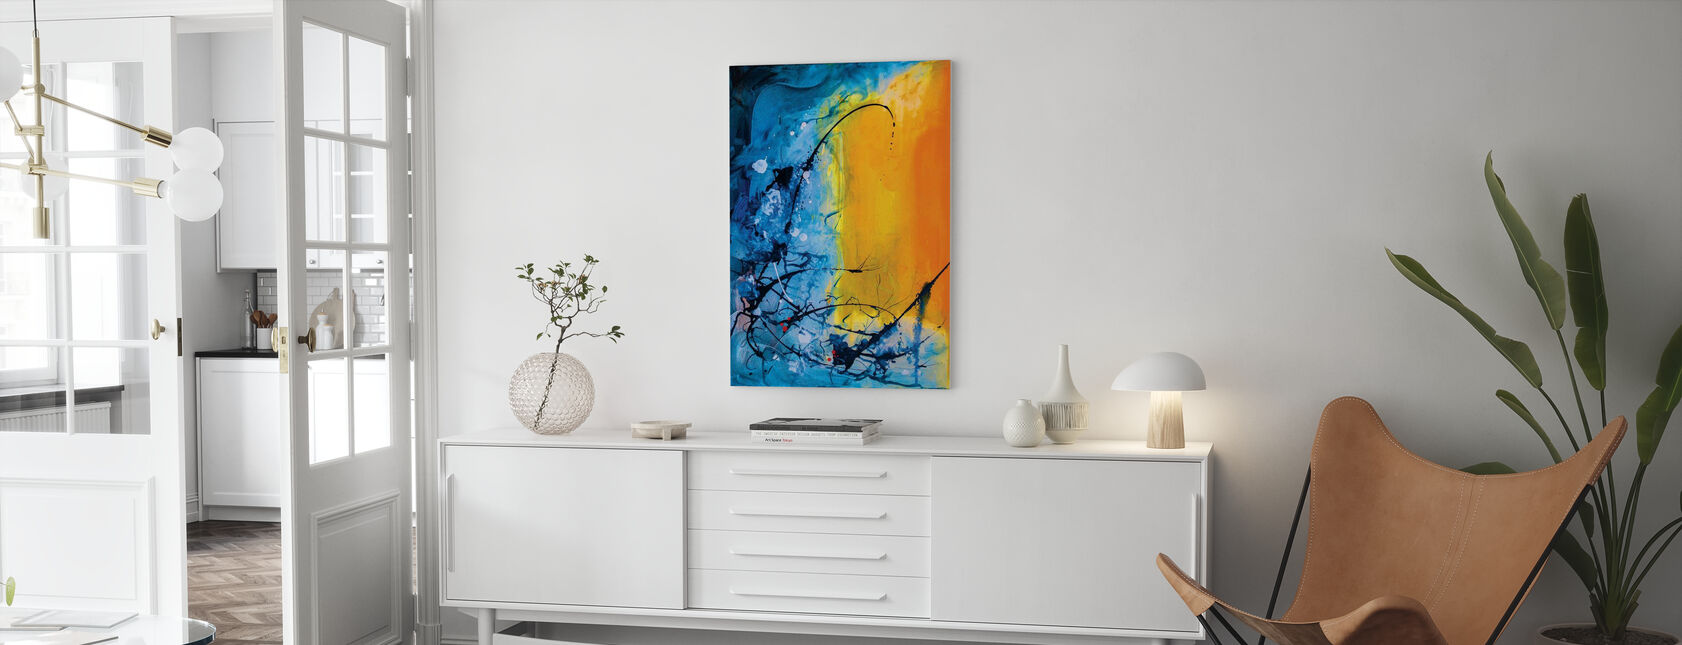 Hello 2 - Canvas print - Living Room